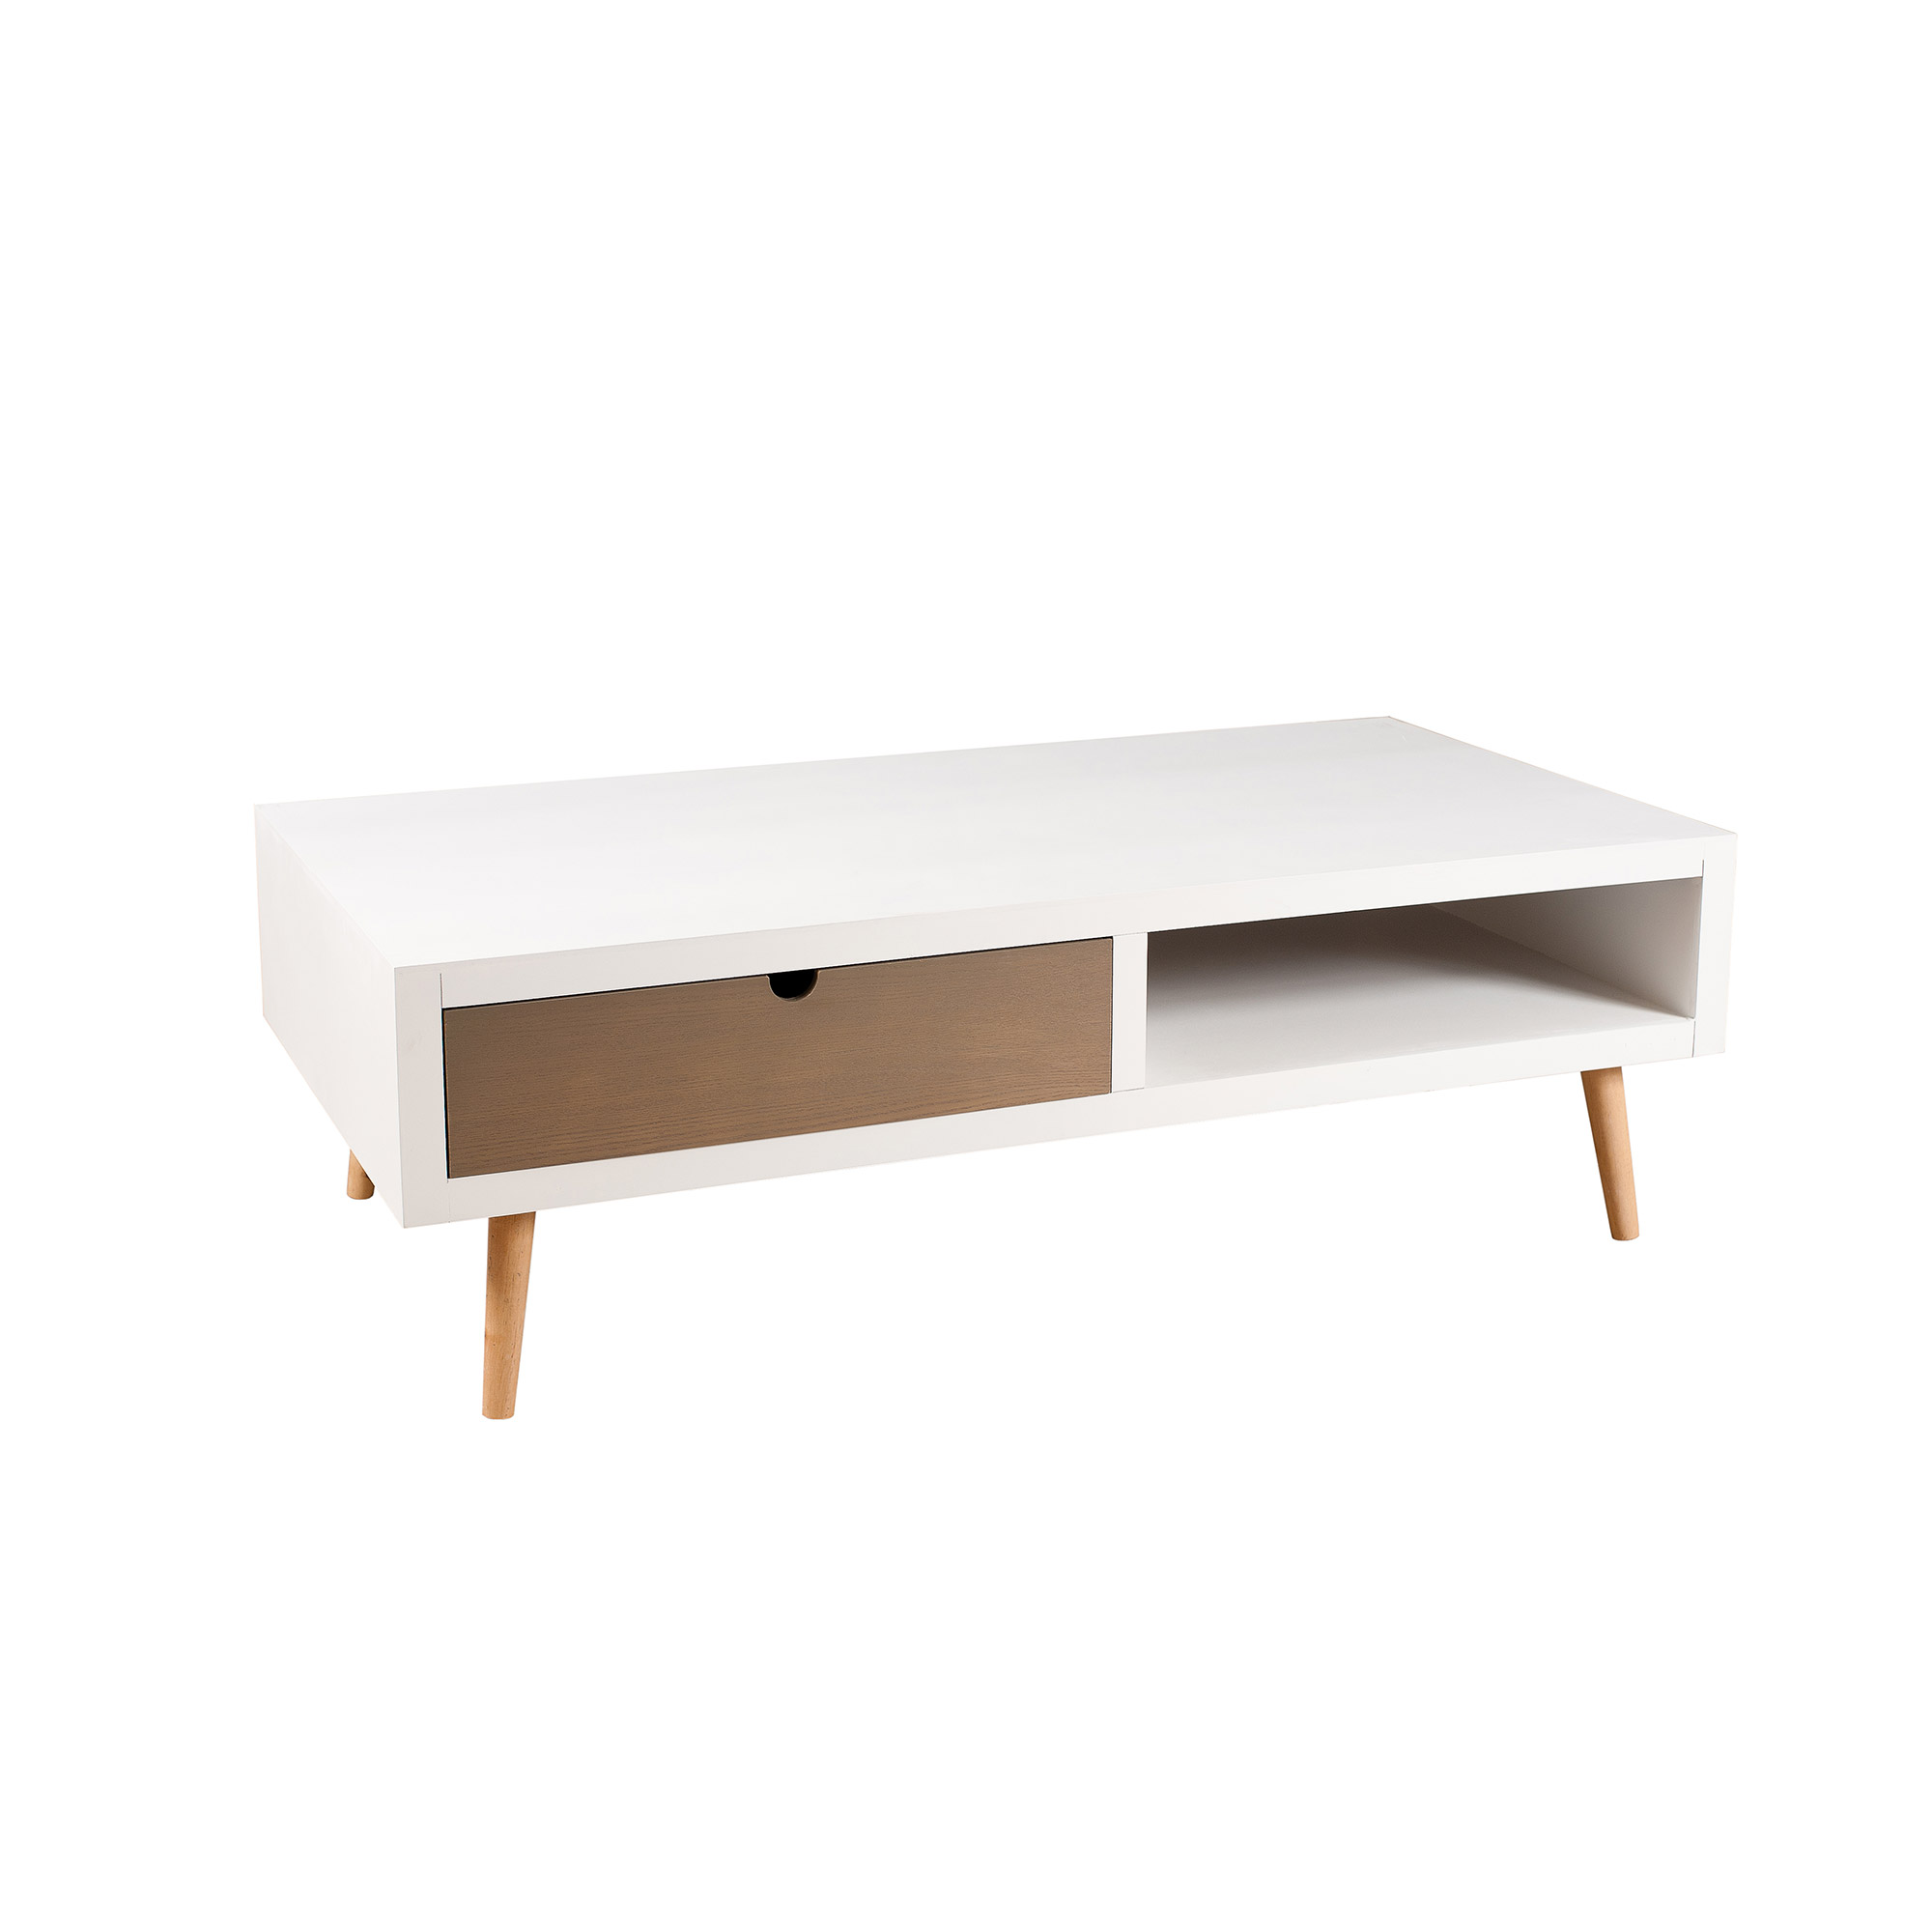 Petite table basse rectangulaire bois